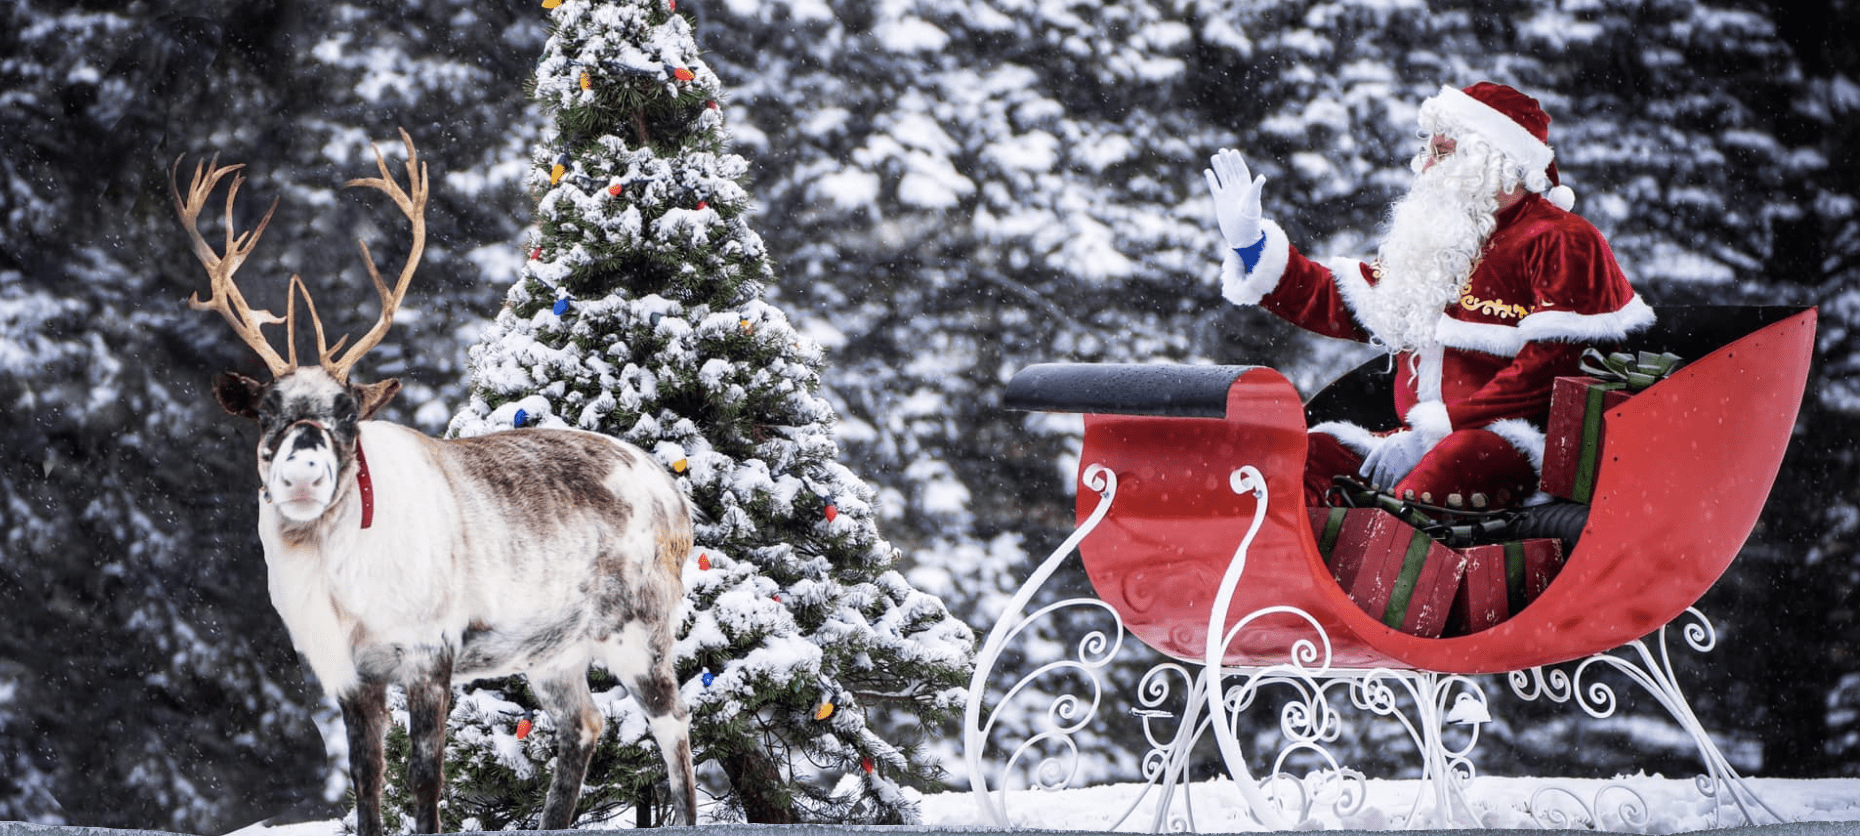 Santa, a sleigh and a live reindeer